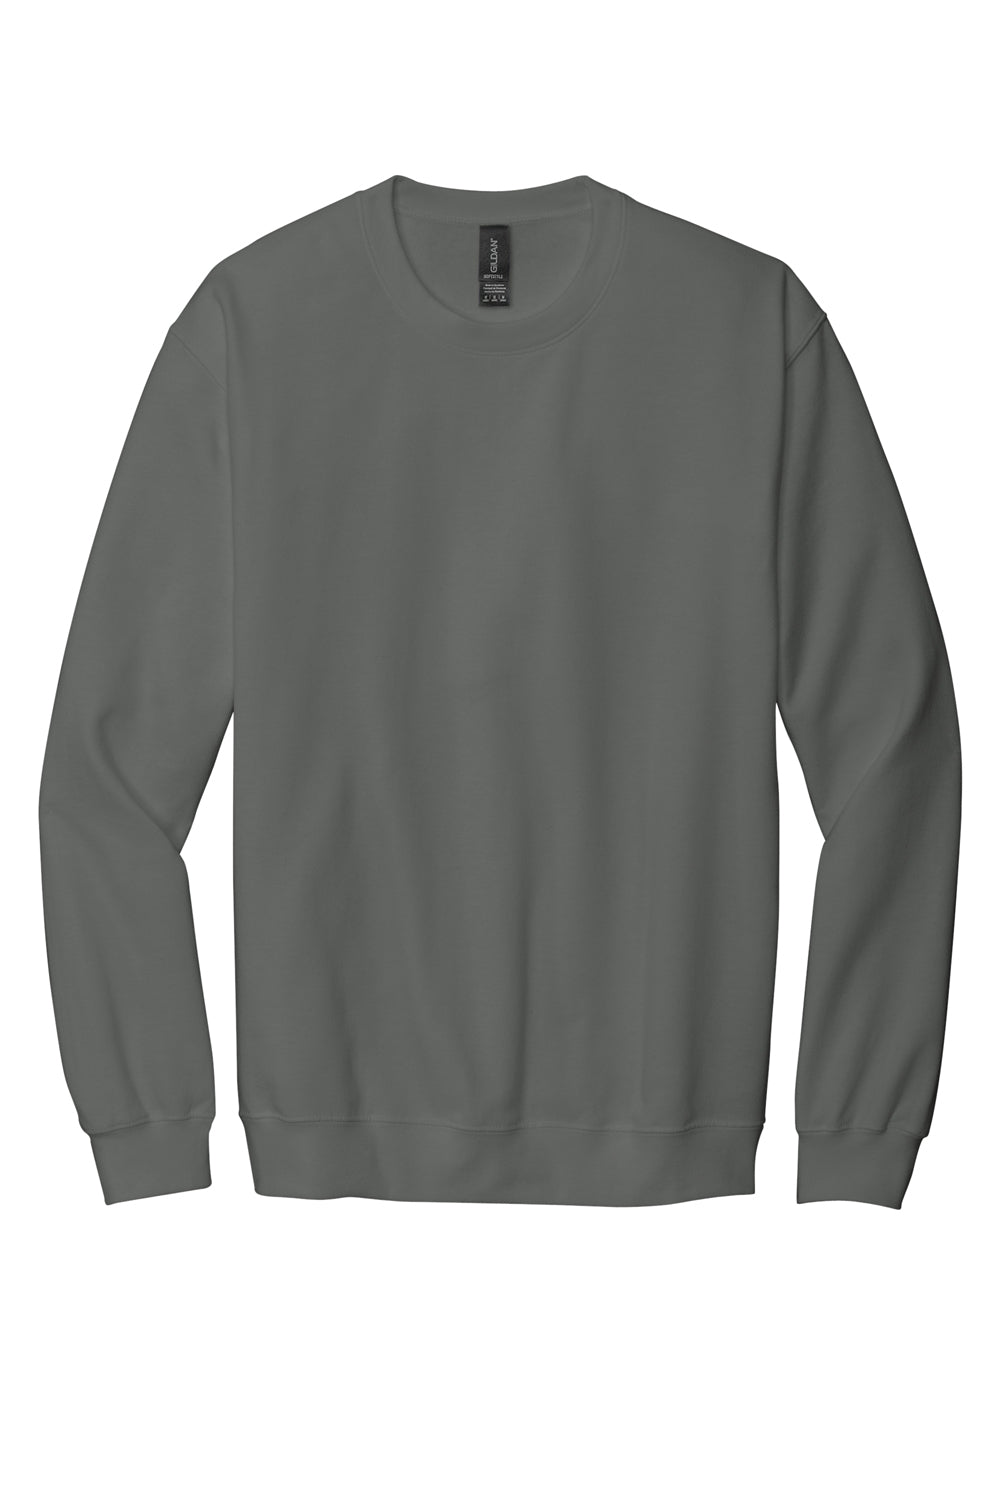 Gildan SF000 Softstyle Crewneck Sweatshirt Charcoal Grey Flat Front